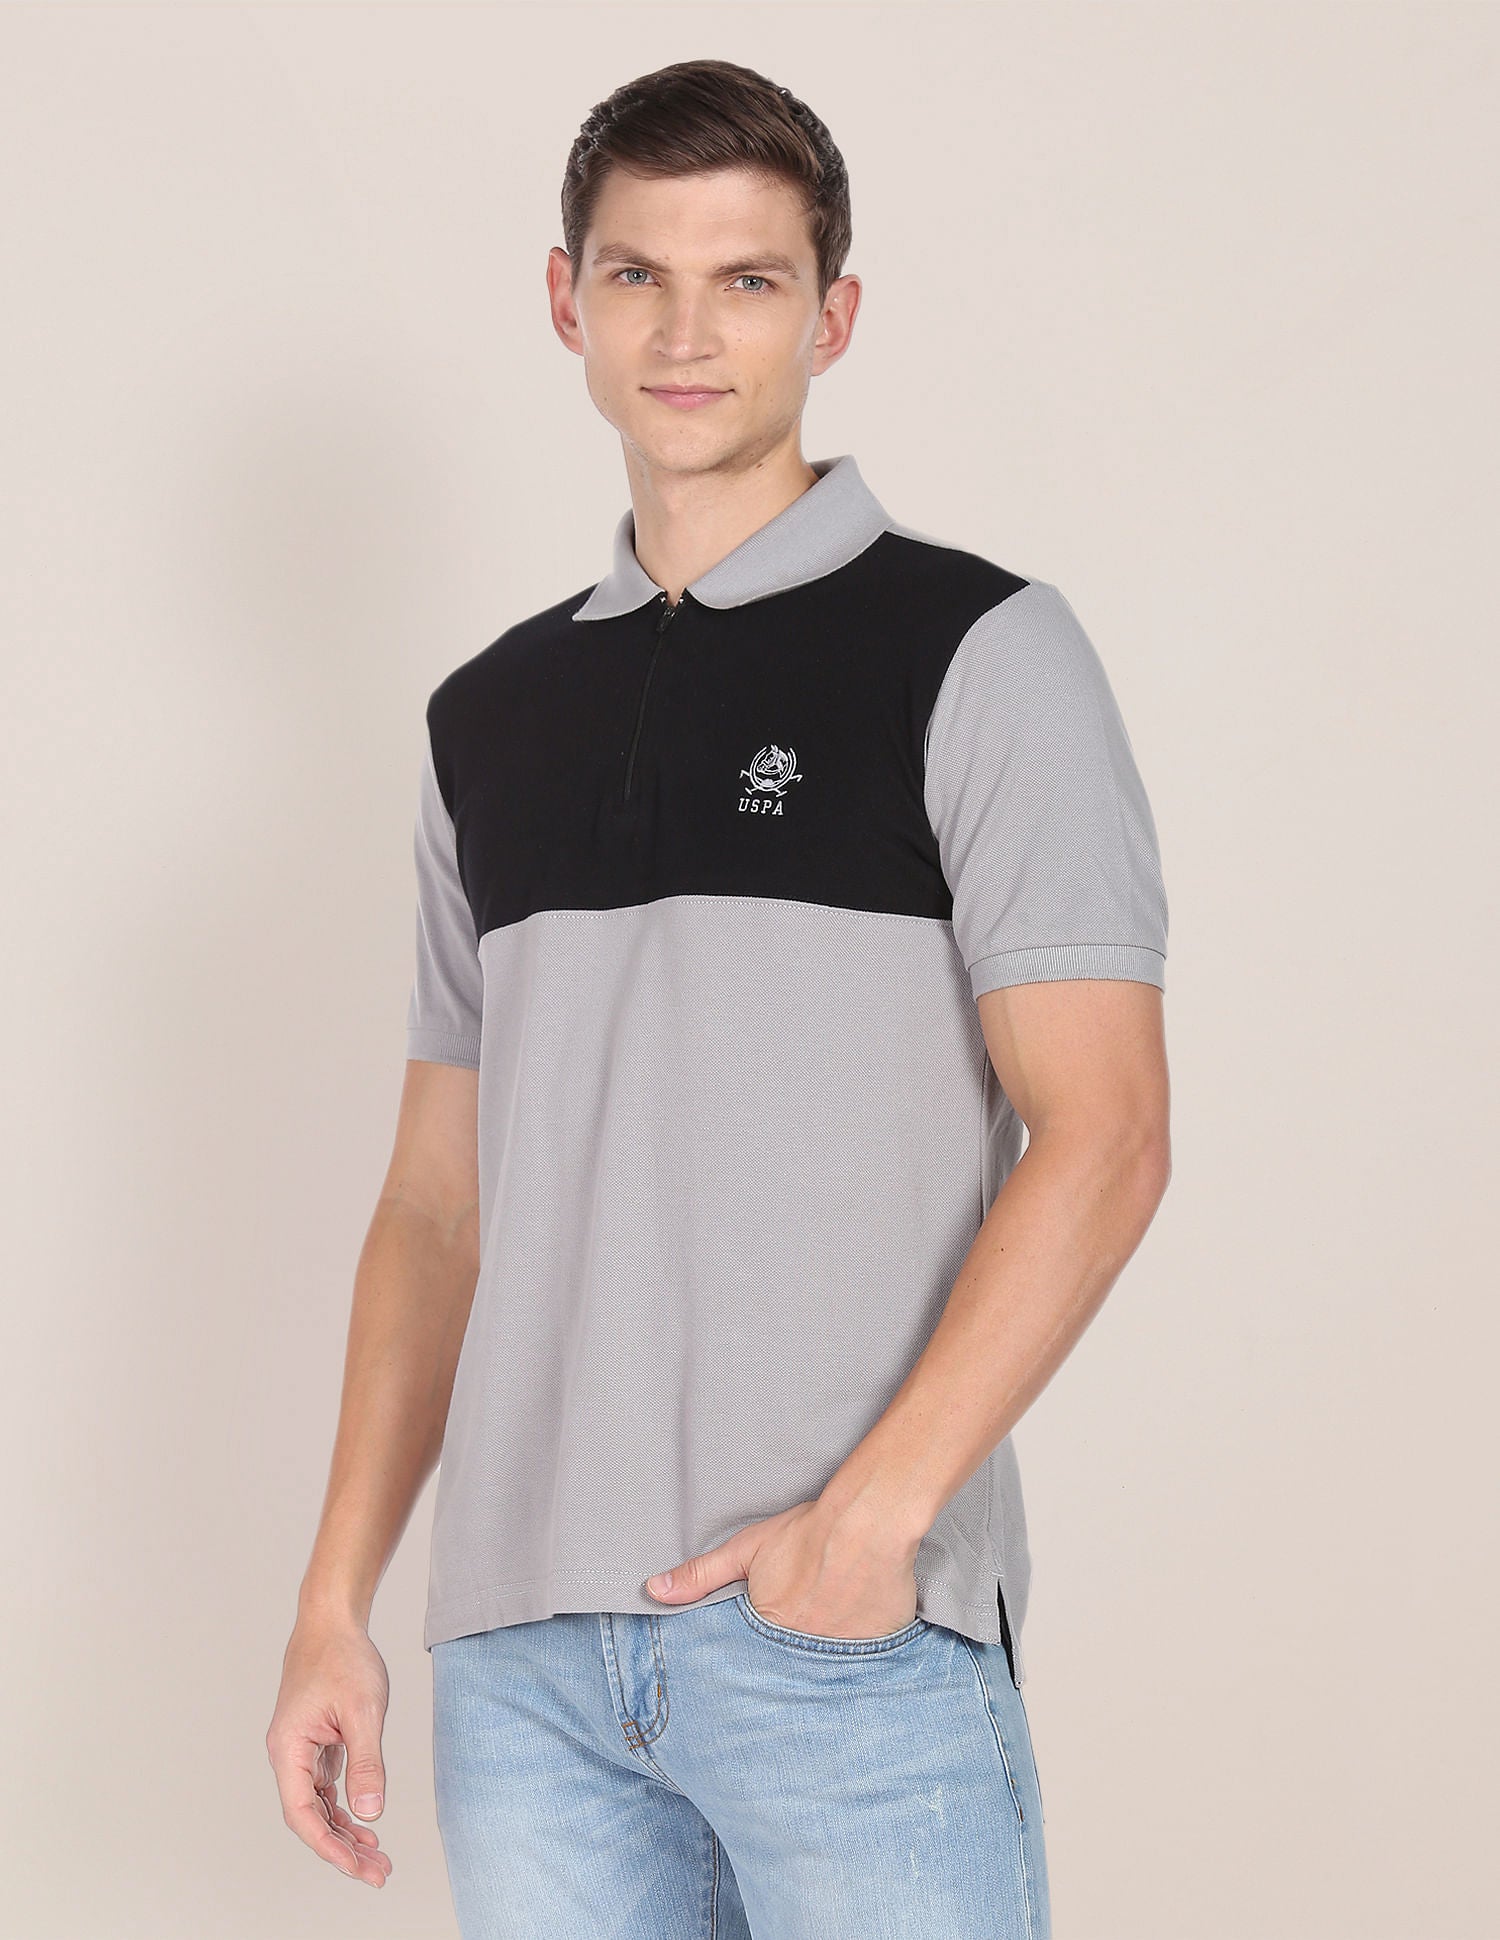 100% Original U.s. Polo Assn. Men's Shirts Made In Turkey - Shirts -  AliExpress